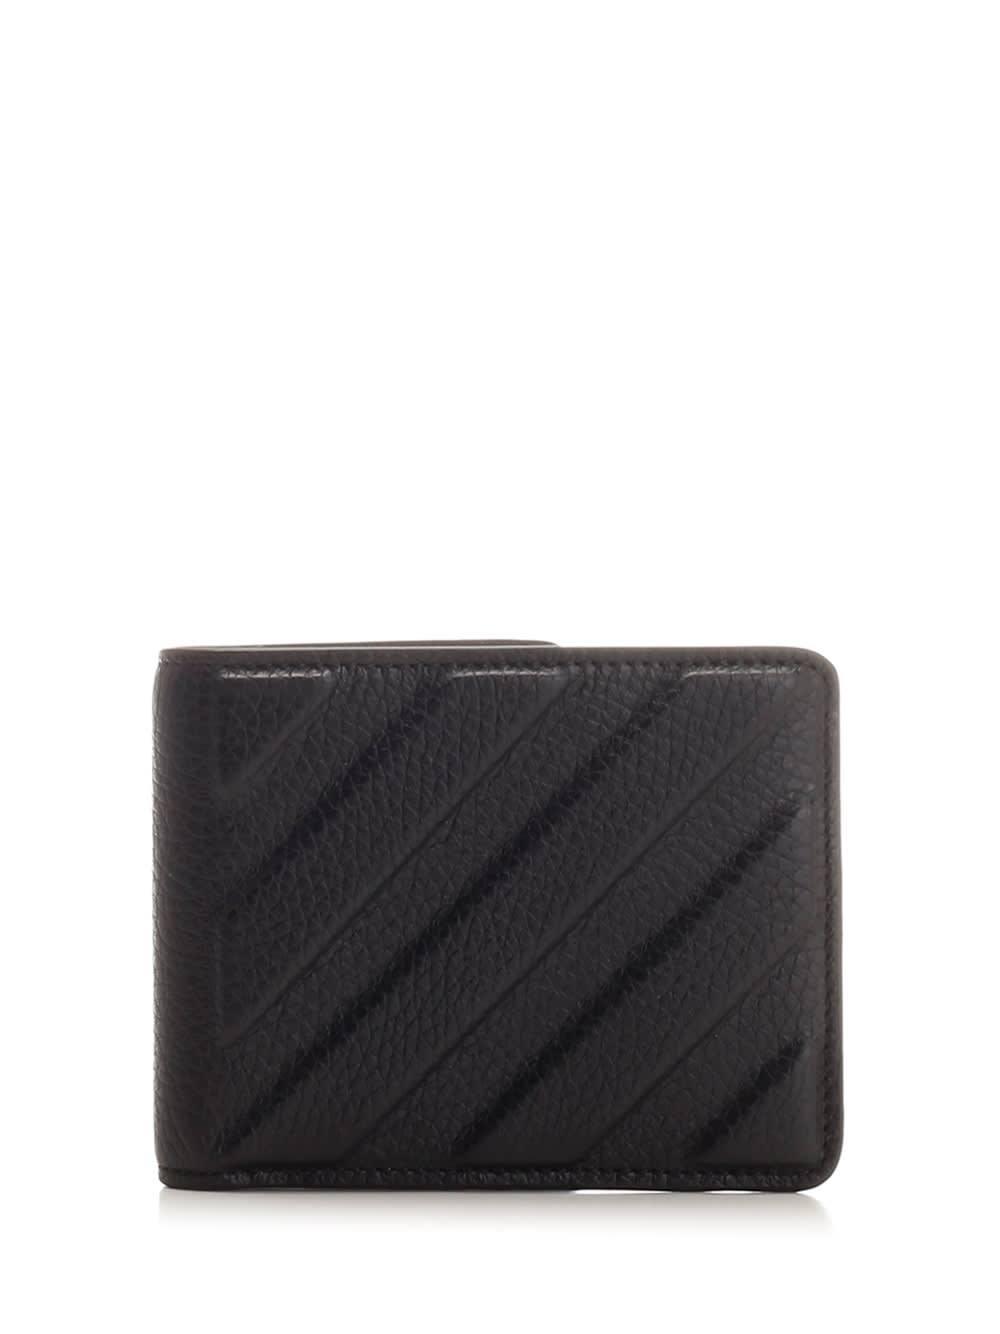 Off-White c/o Virgil Abloh Strap Detail Embossed Wallet in Black